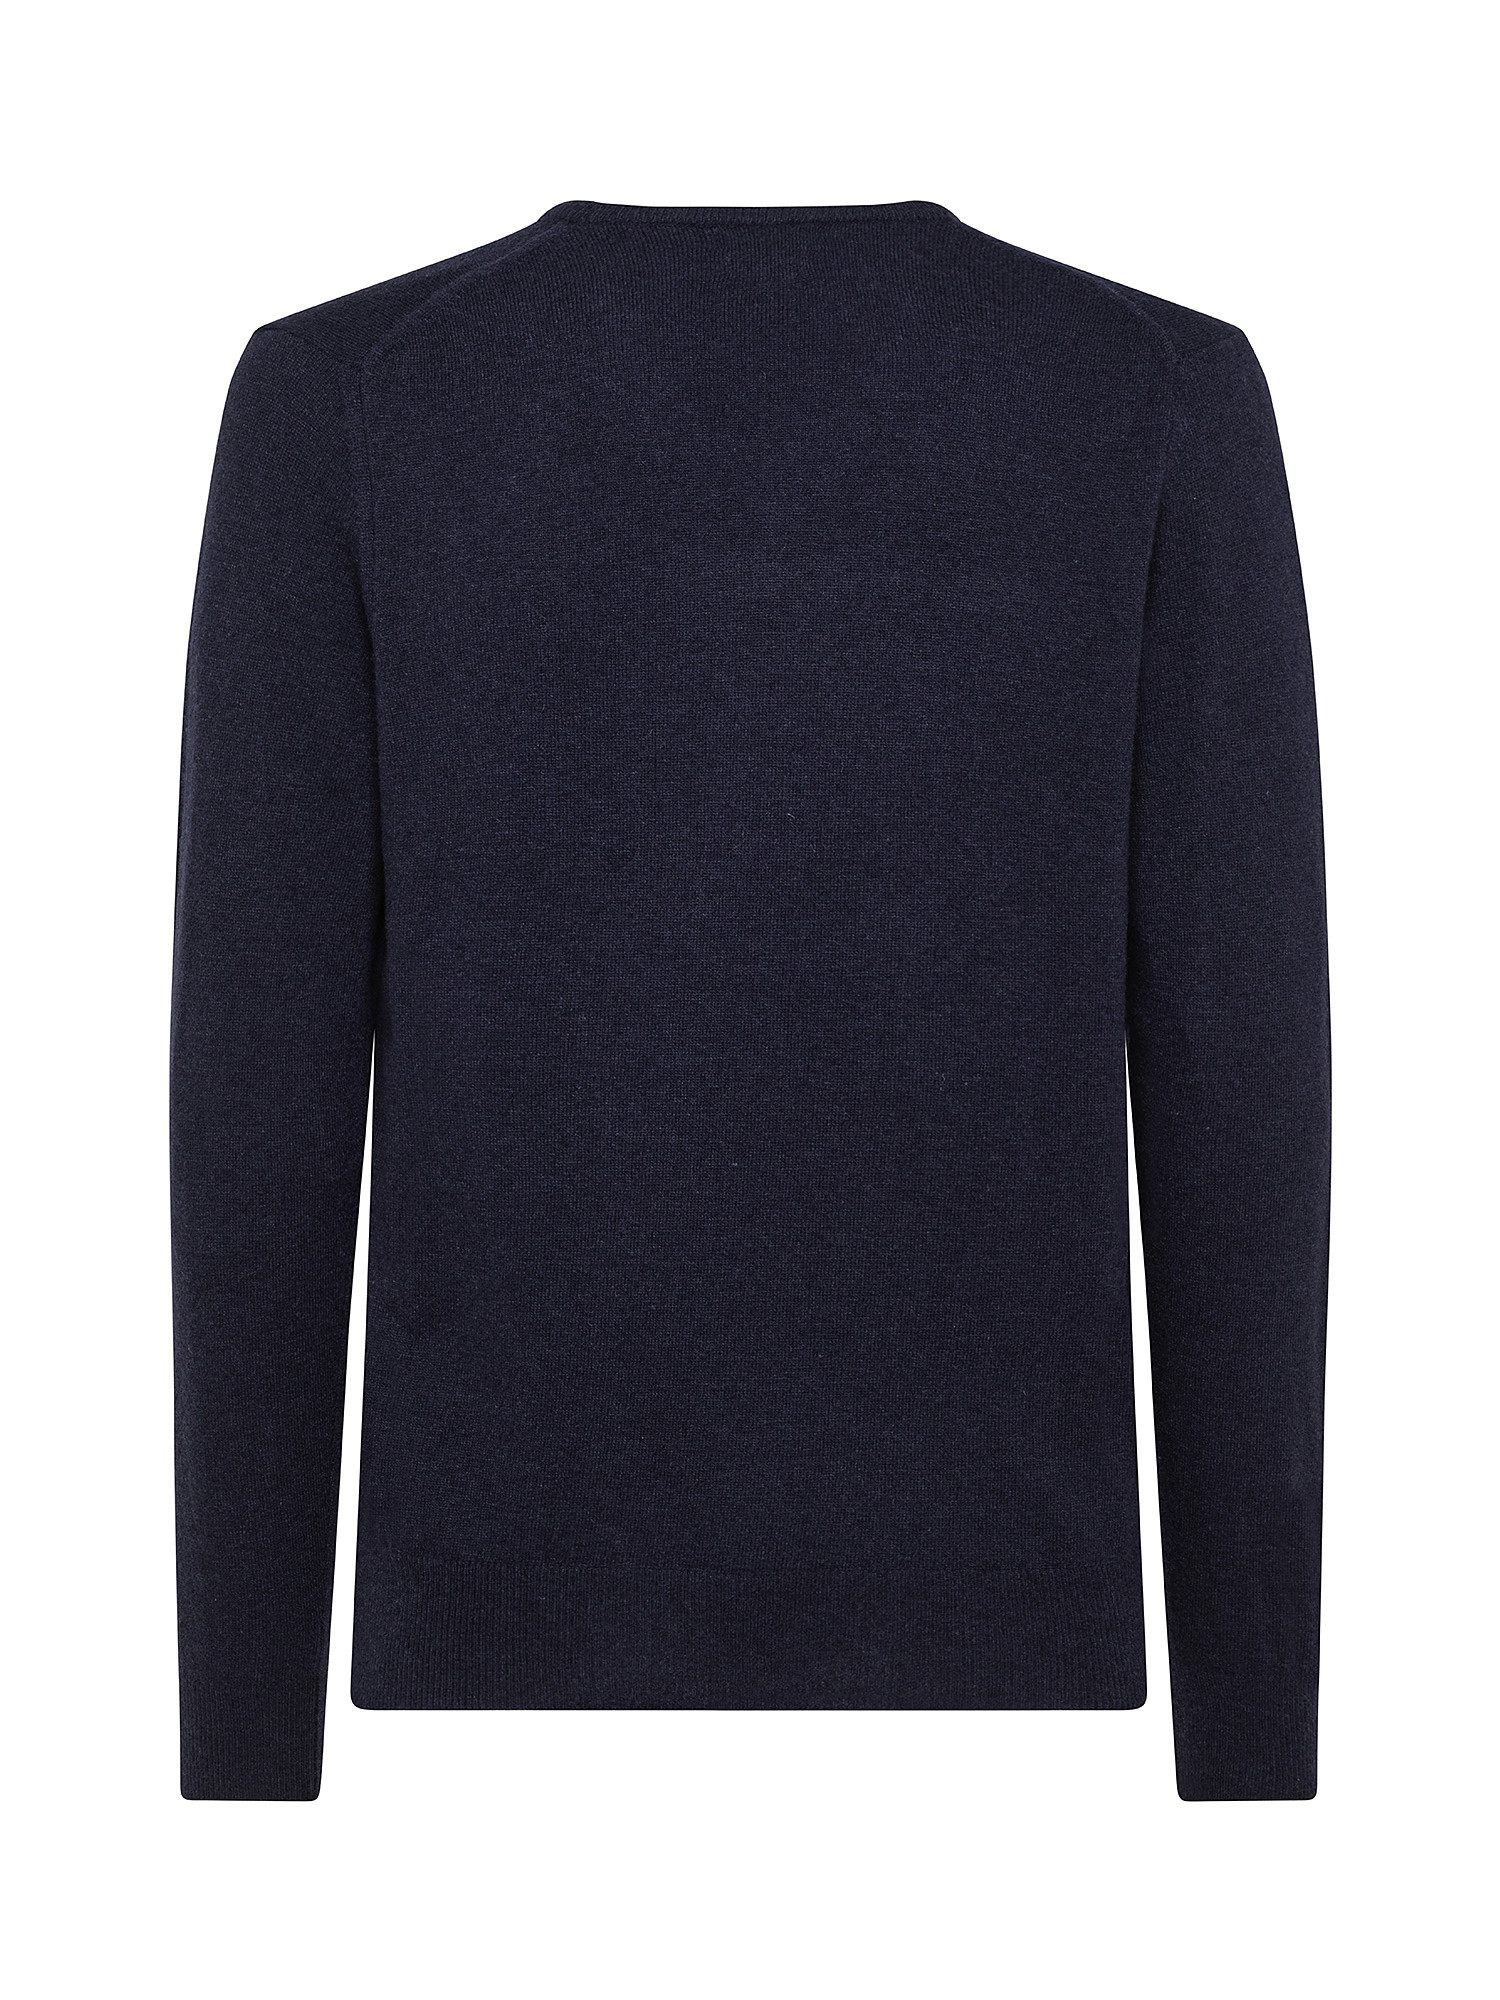 Cashmere Blend V-neck sweater with noble fibers, Blue, large image number 1